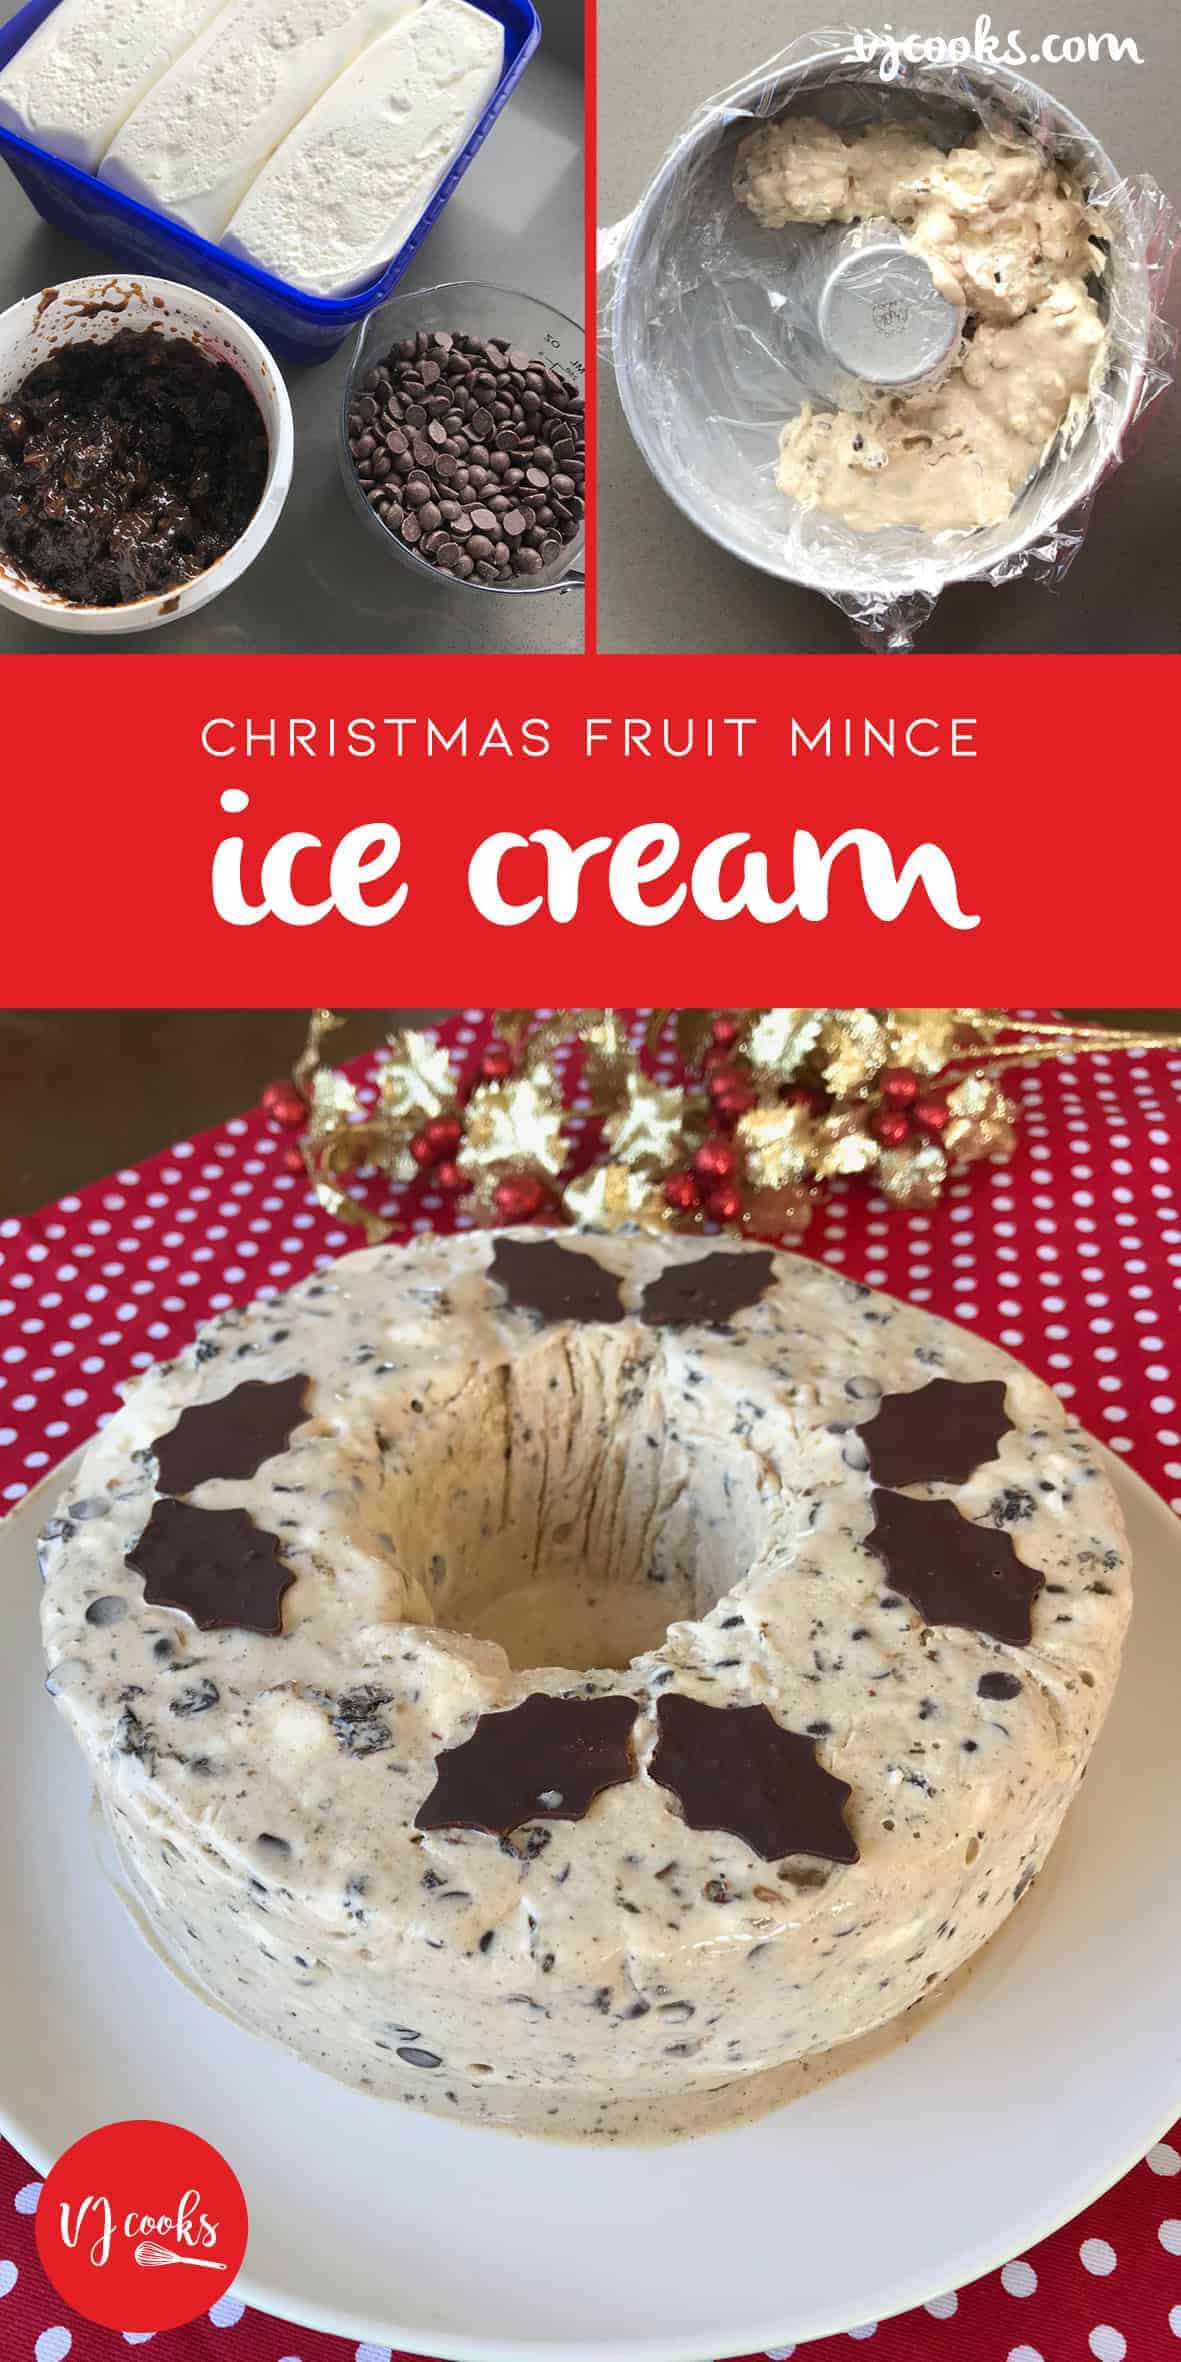 VJ cooks Christmas fruit mince ice cream 